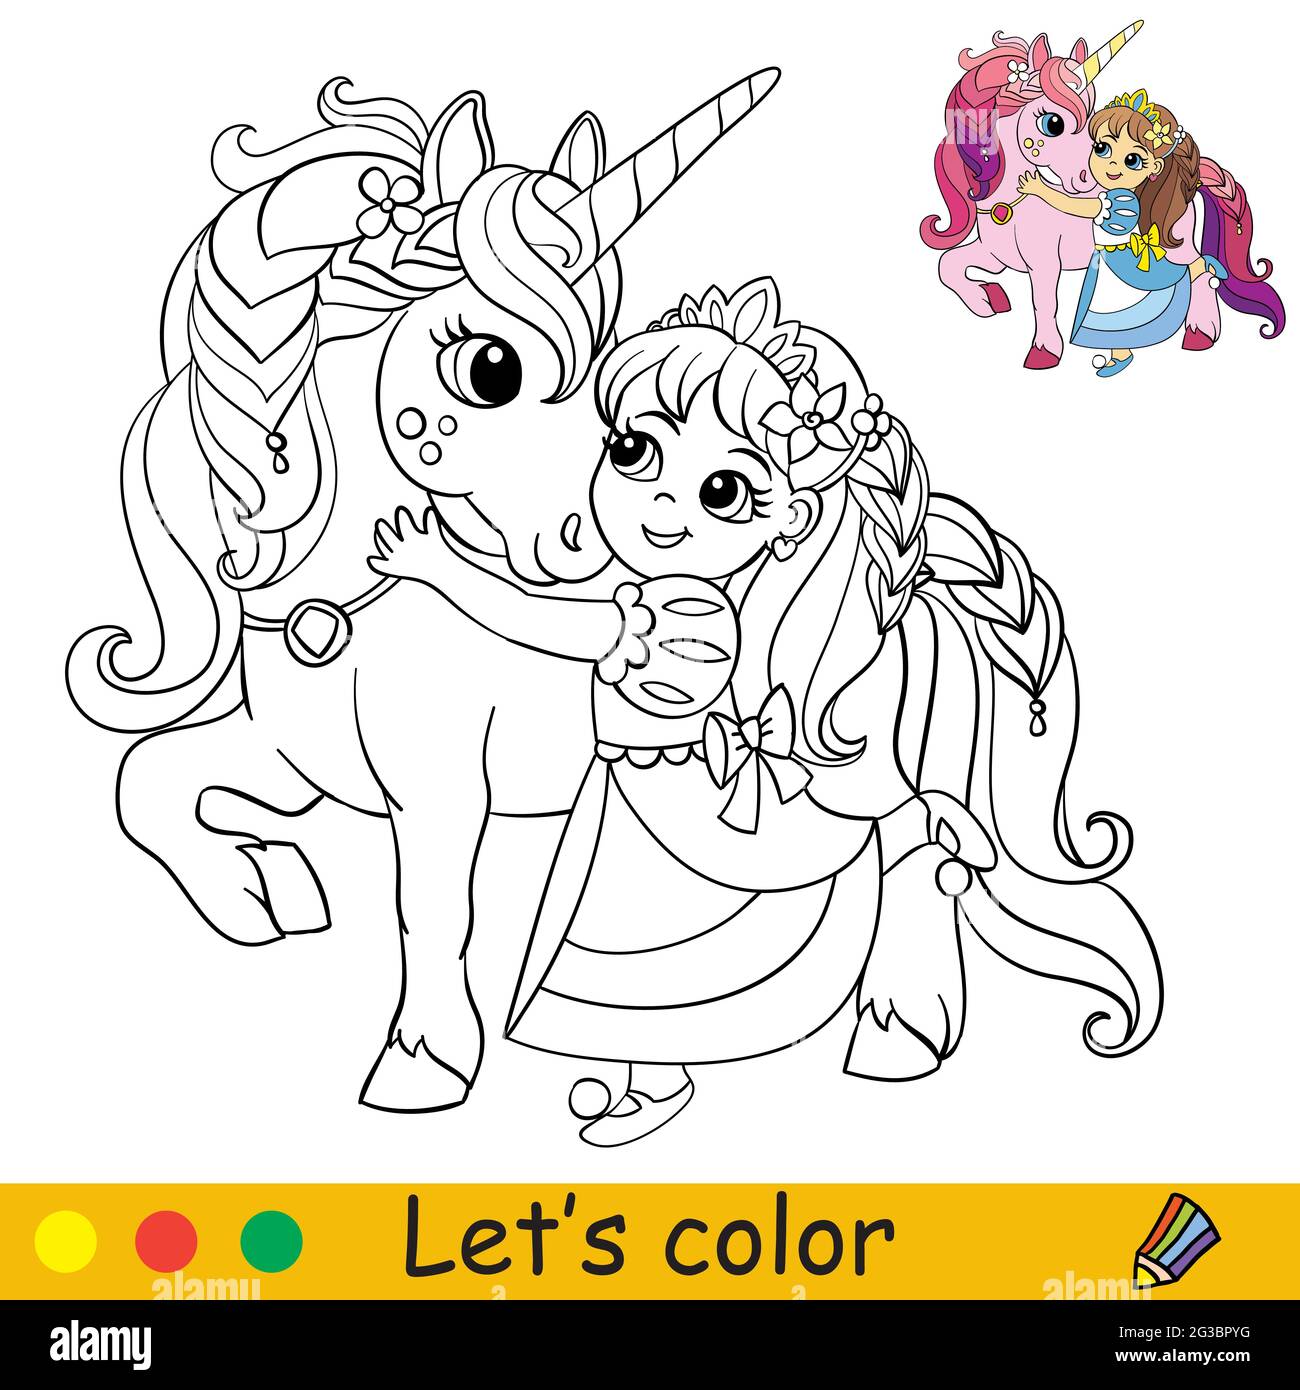 Libro para colorear unicornio fotografías e imágenes de alta resolución -  Alamy